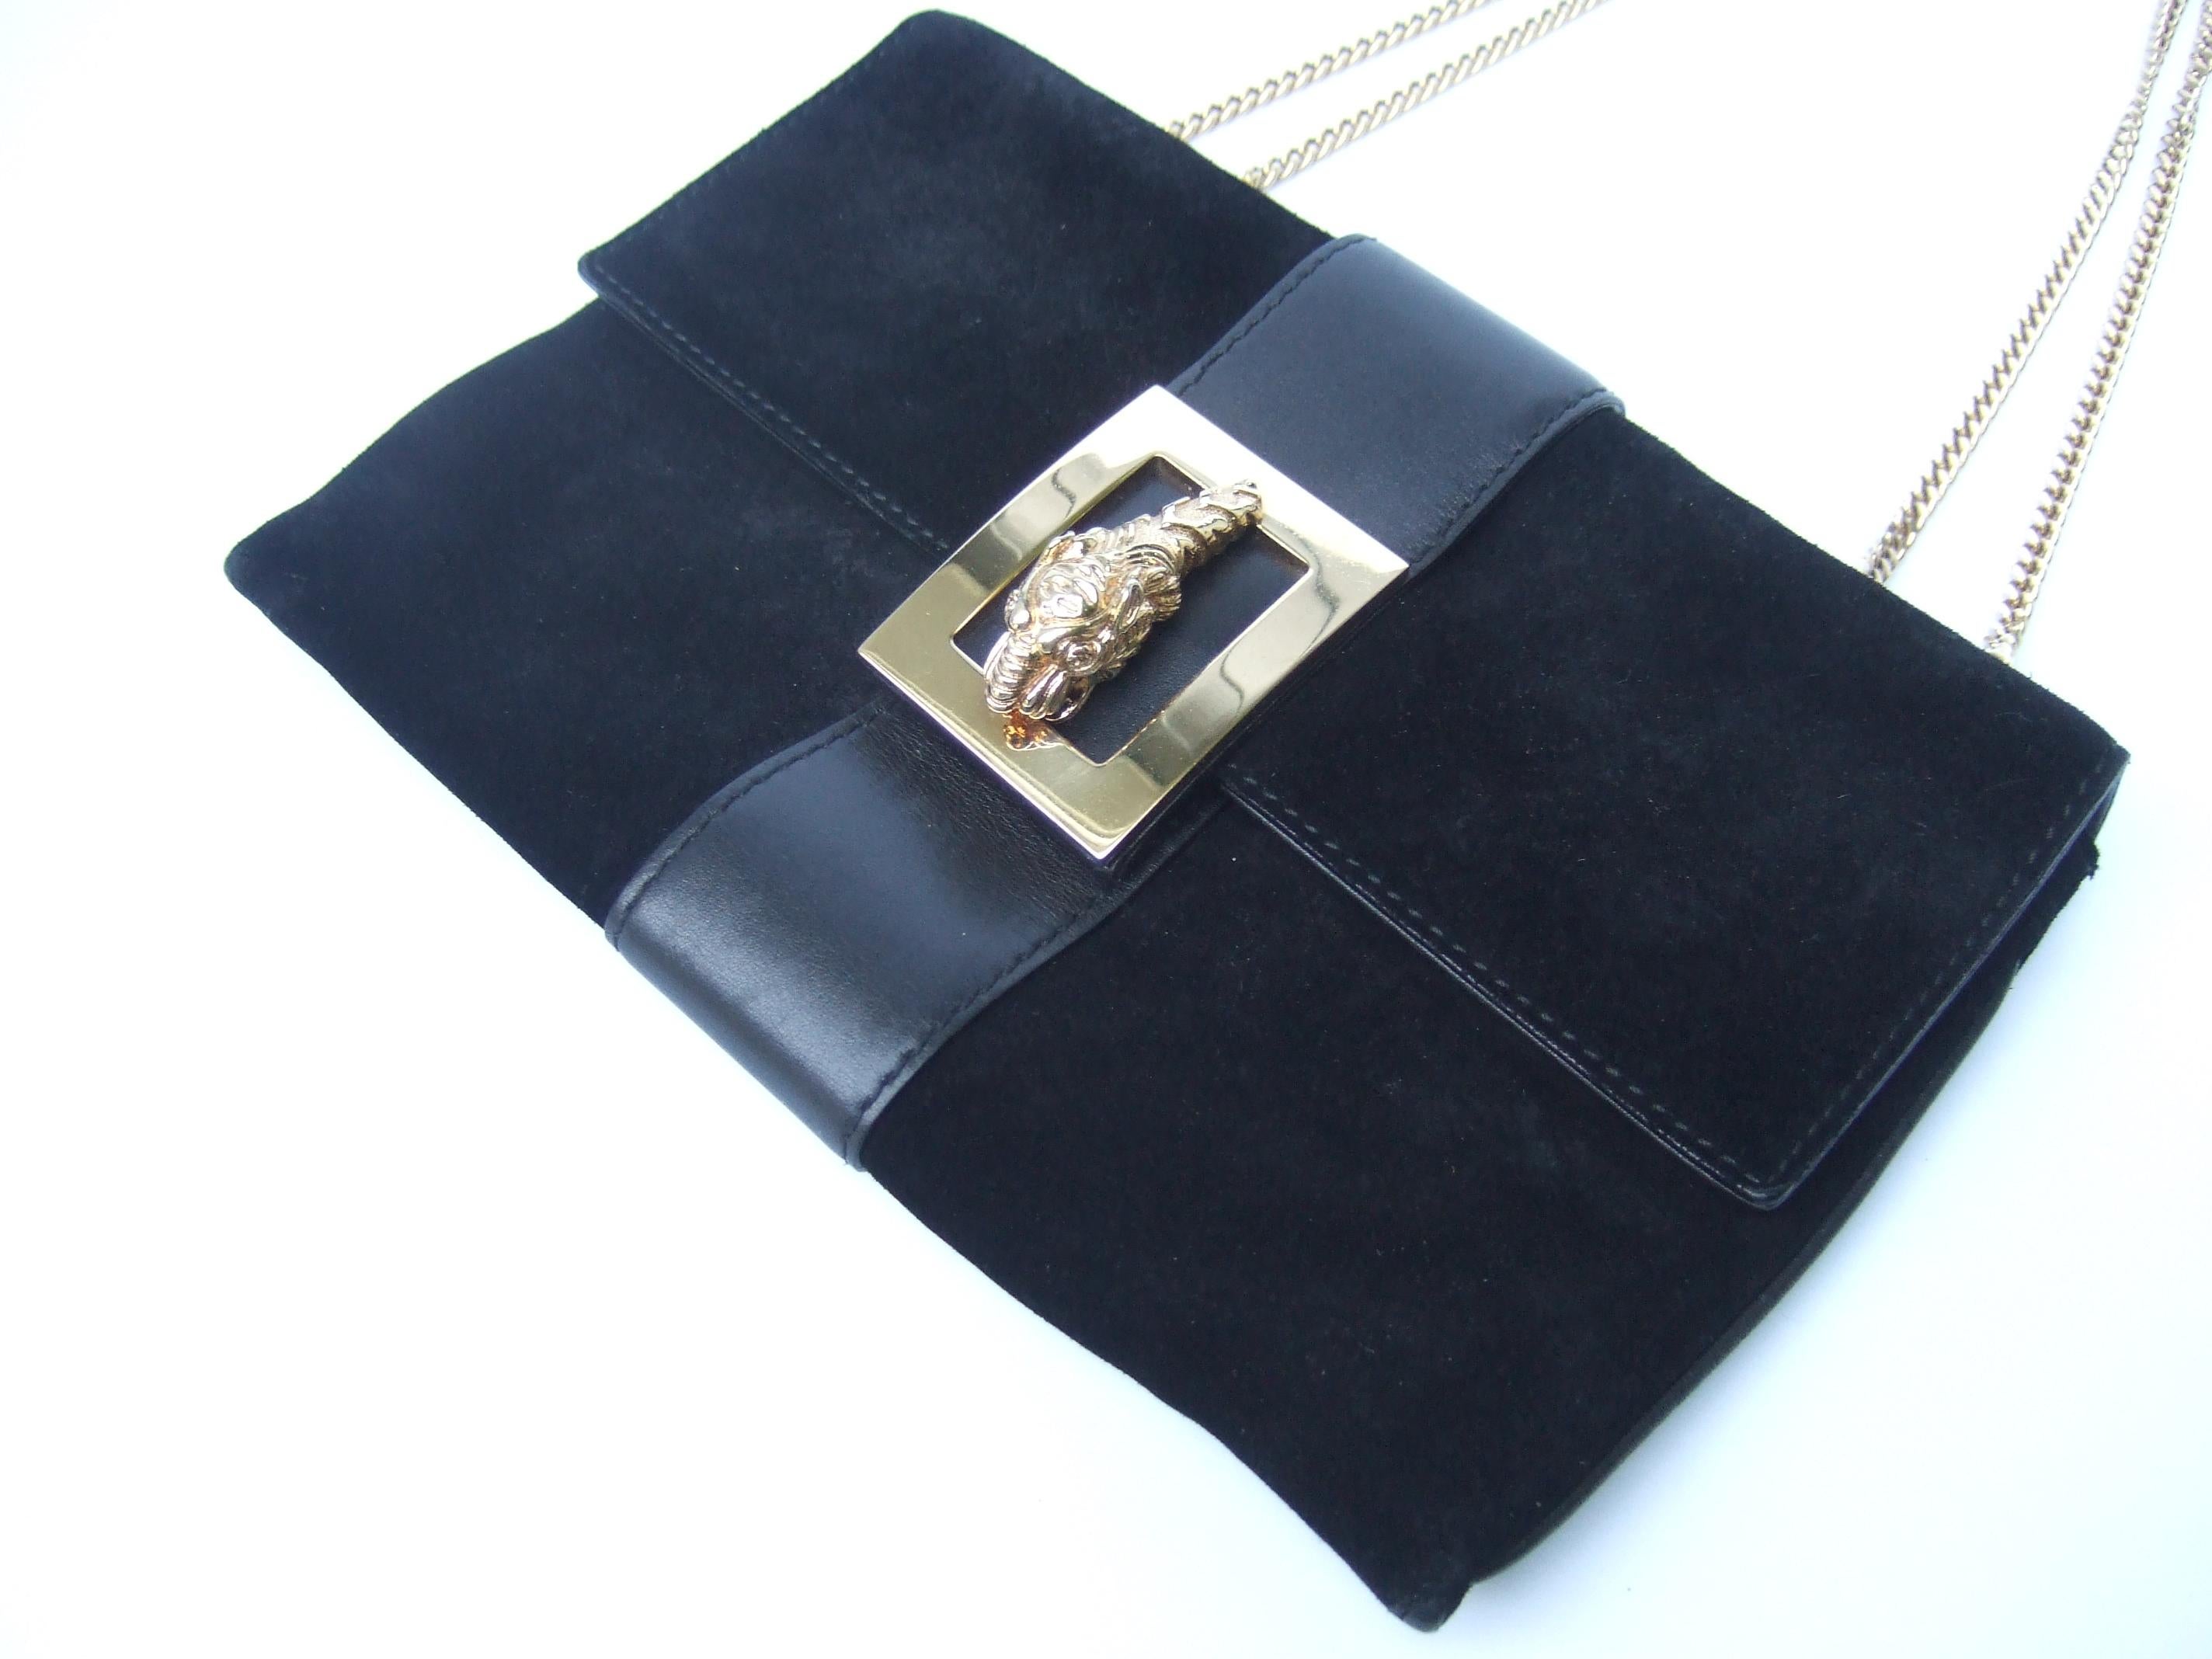 Gucci Italy Rare Black Suede Tiger Emblem Handbag Tom Ford Design c 1990s  For Sale 3